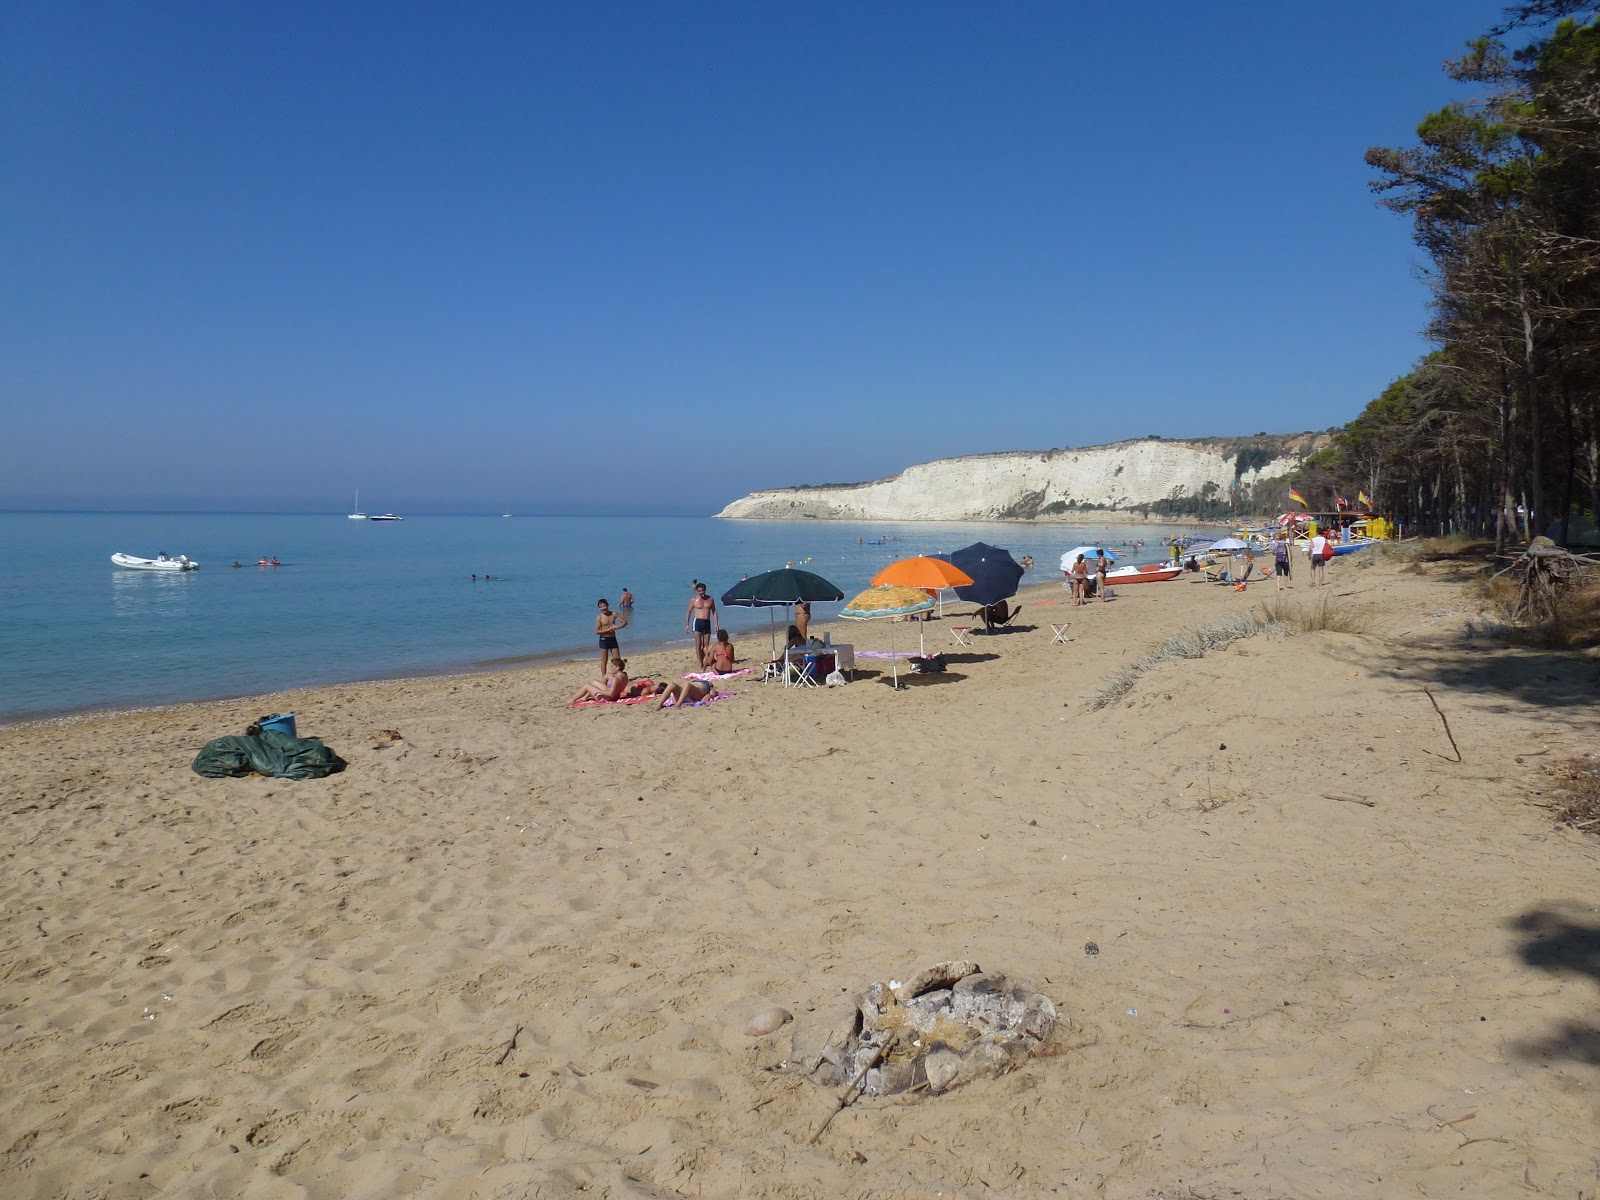 Fotografie cu Spiaggia Di Eraclea Minoa și peisajul său frumos